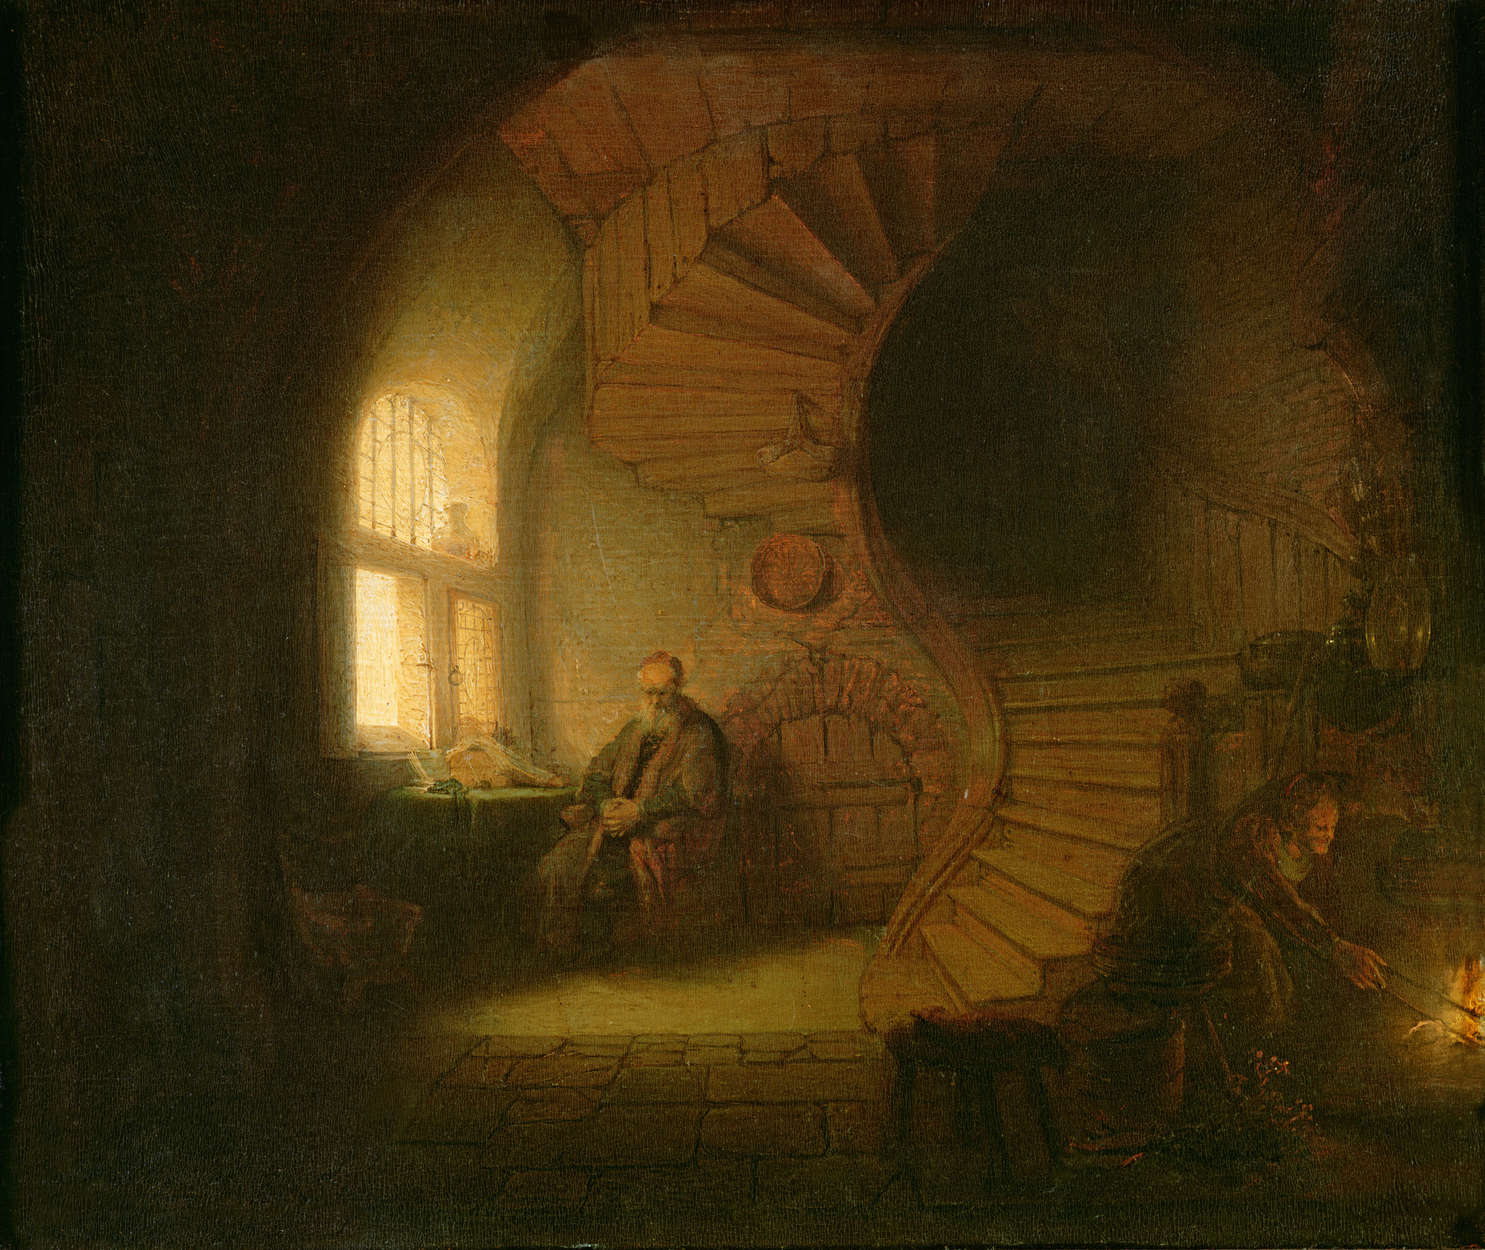             Mural "Filósofo en meditación" de Rembrandt van Rijn
        